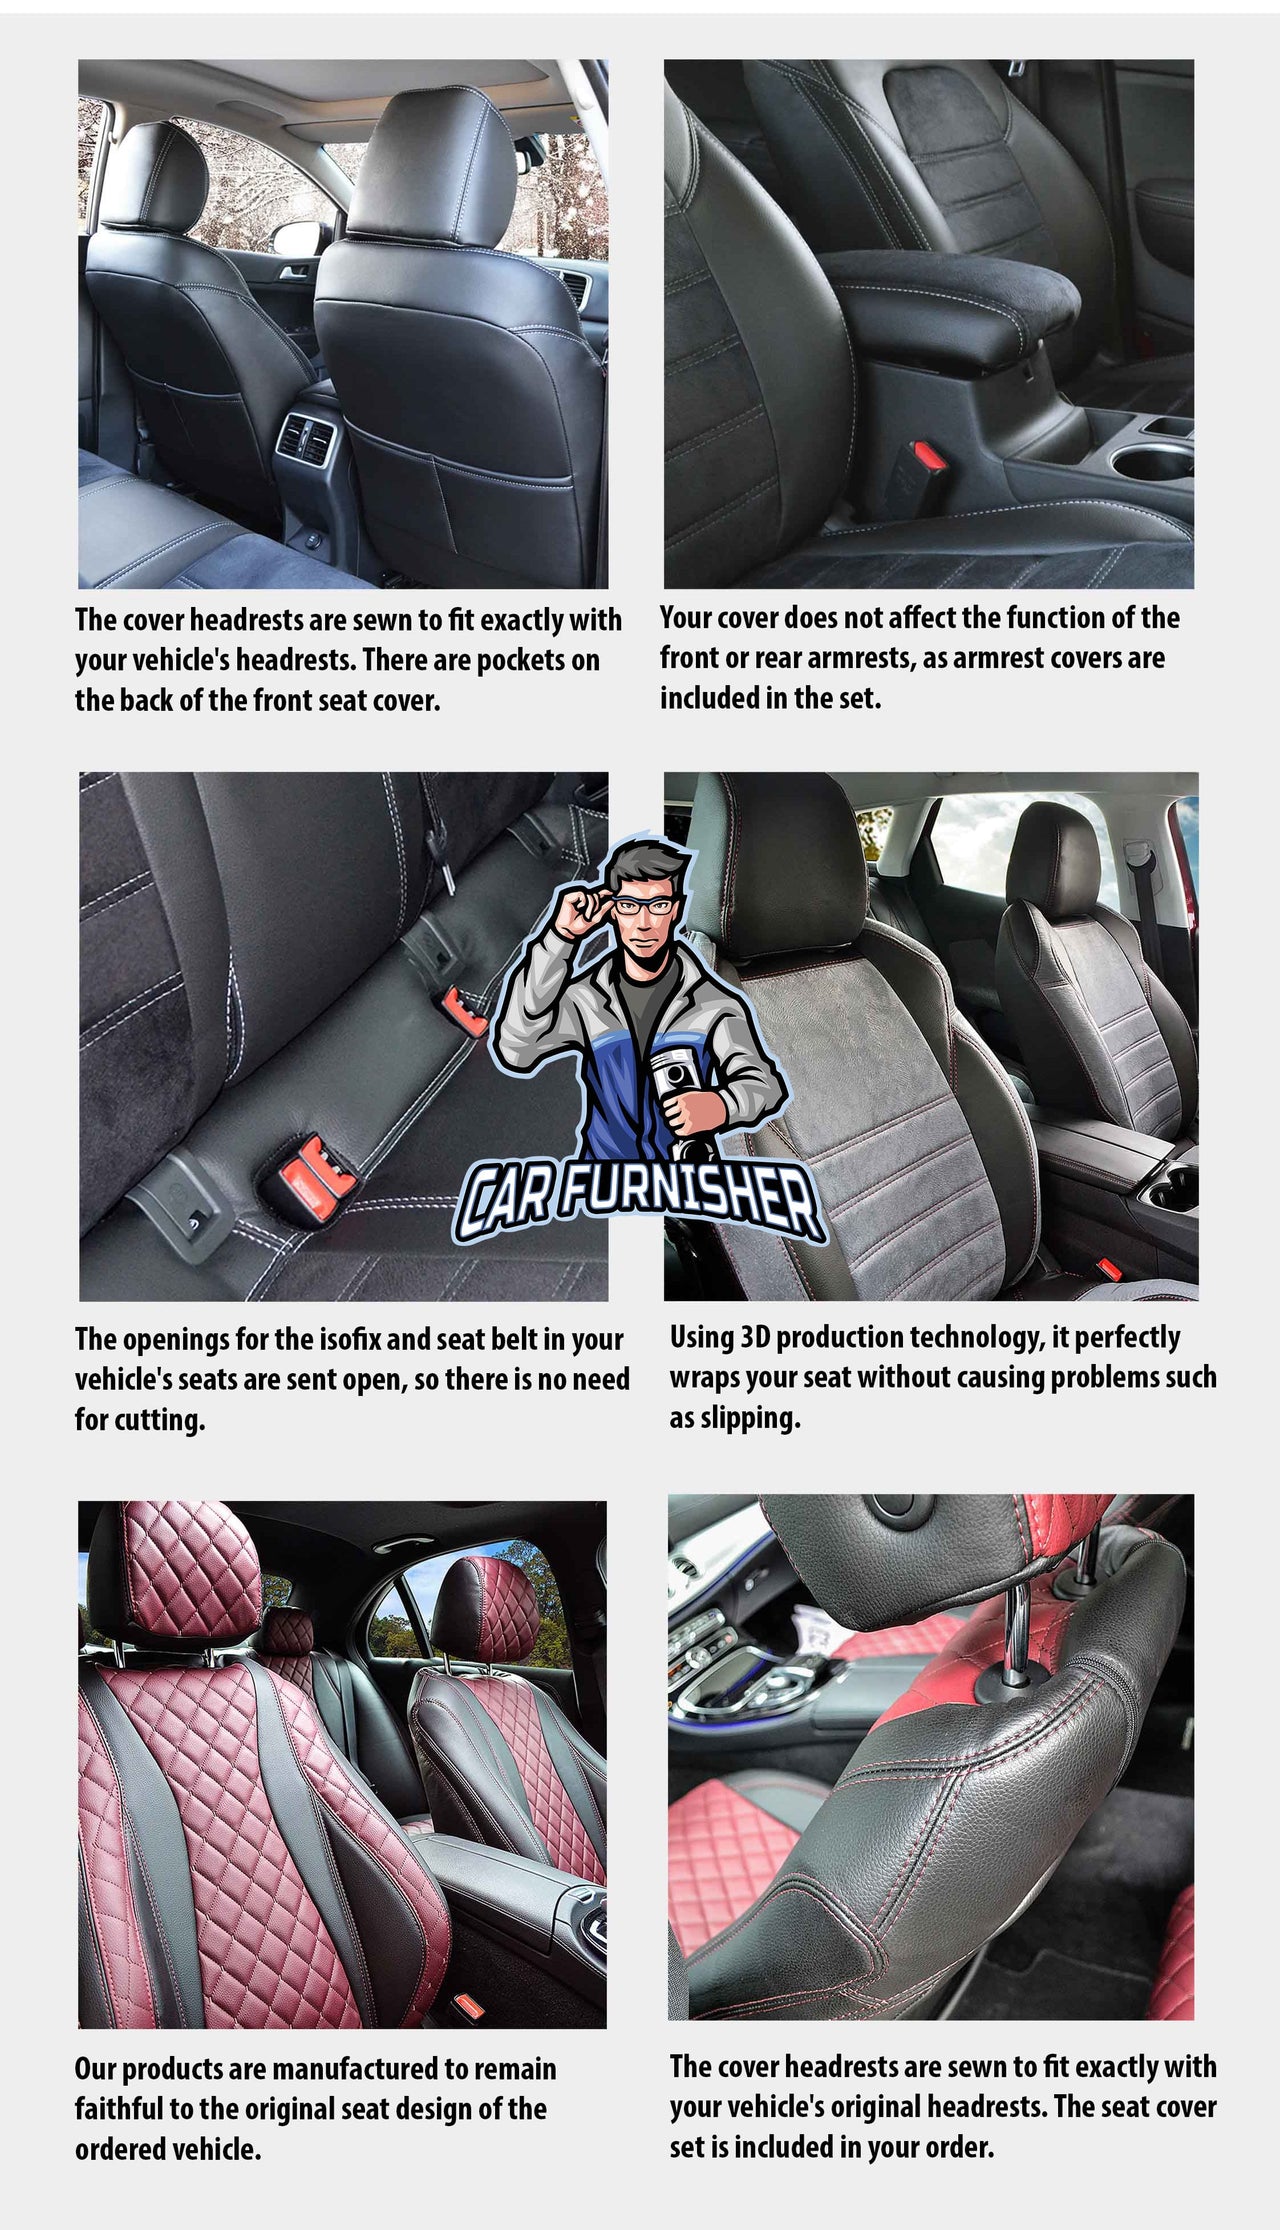 Peugeot 3008 Seat Covers Paris Leather & Jacquard Design Black Leather & Jacquard Fabric